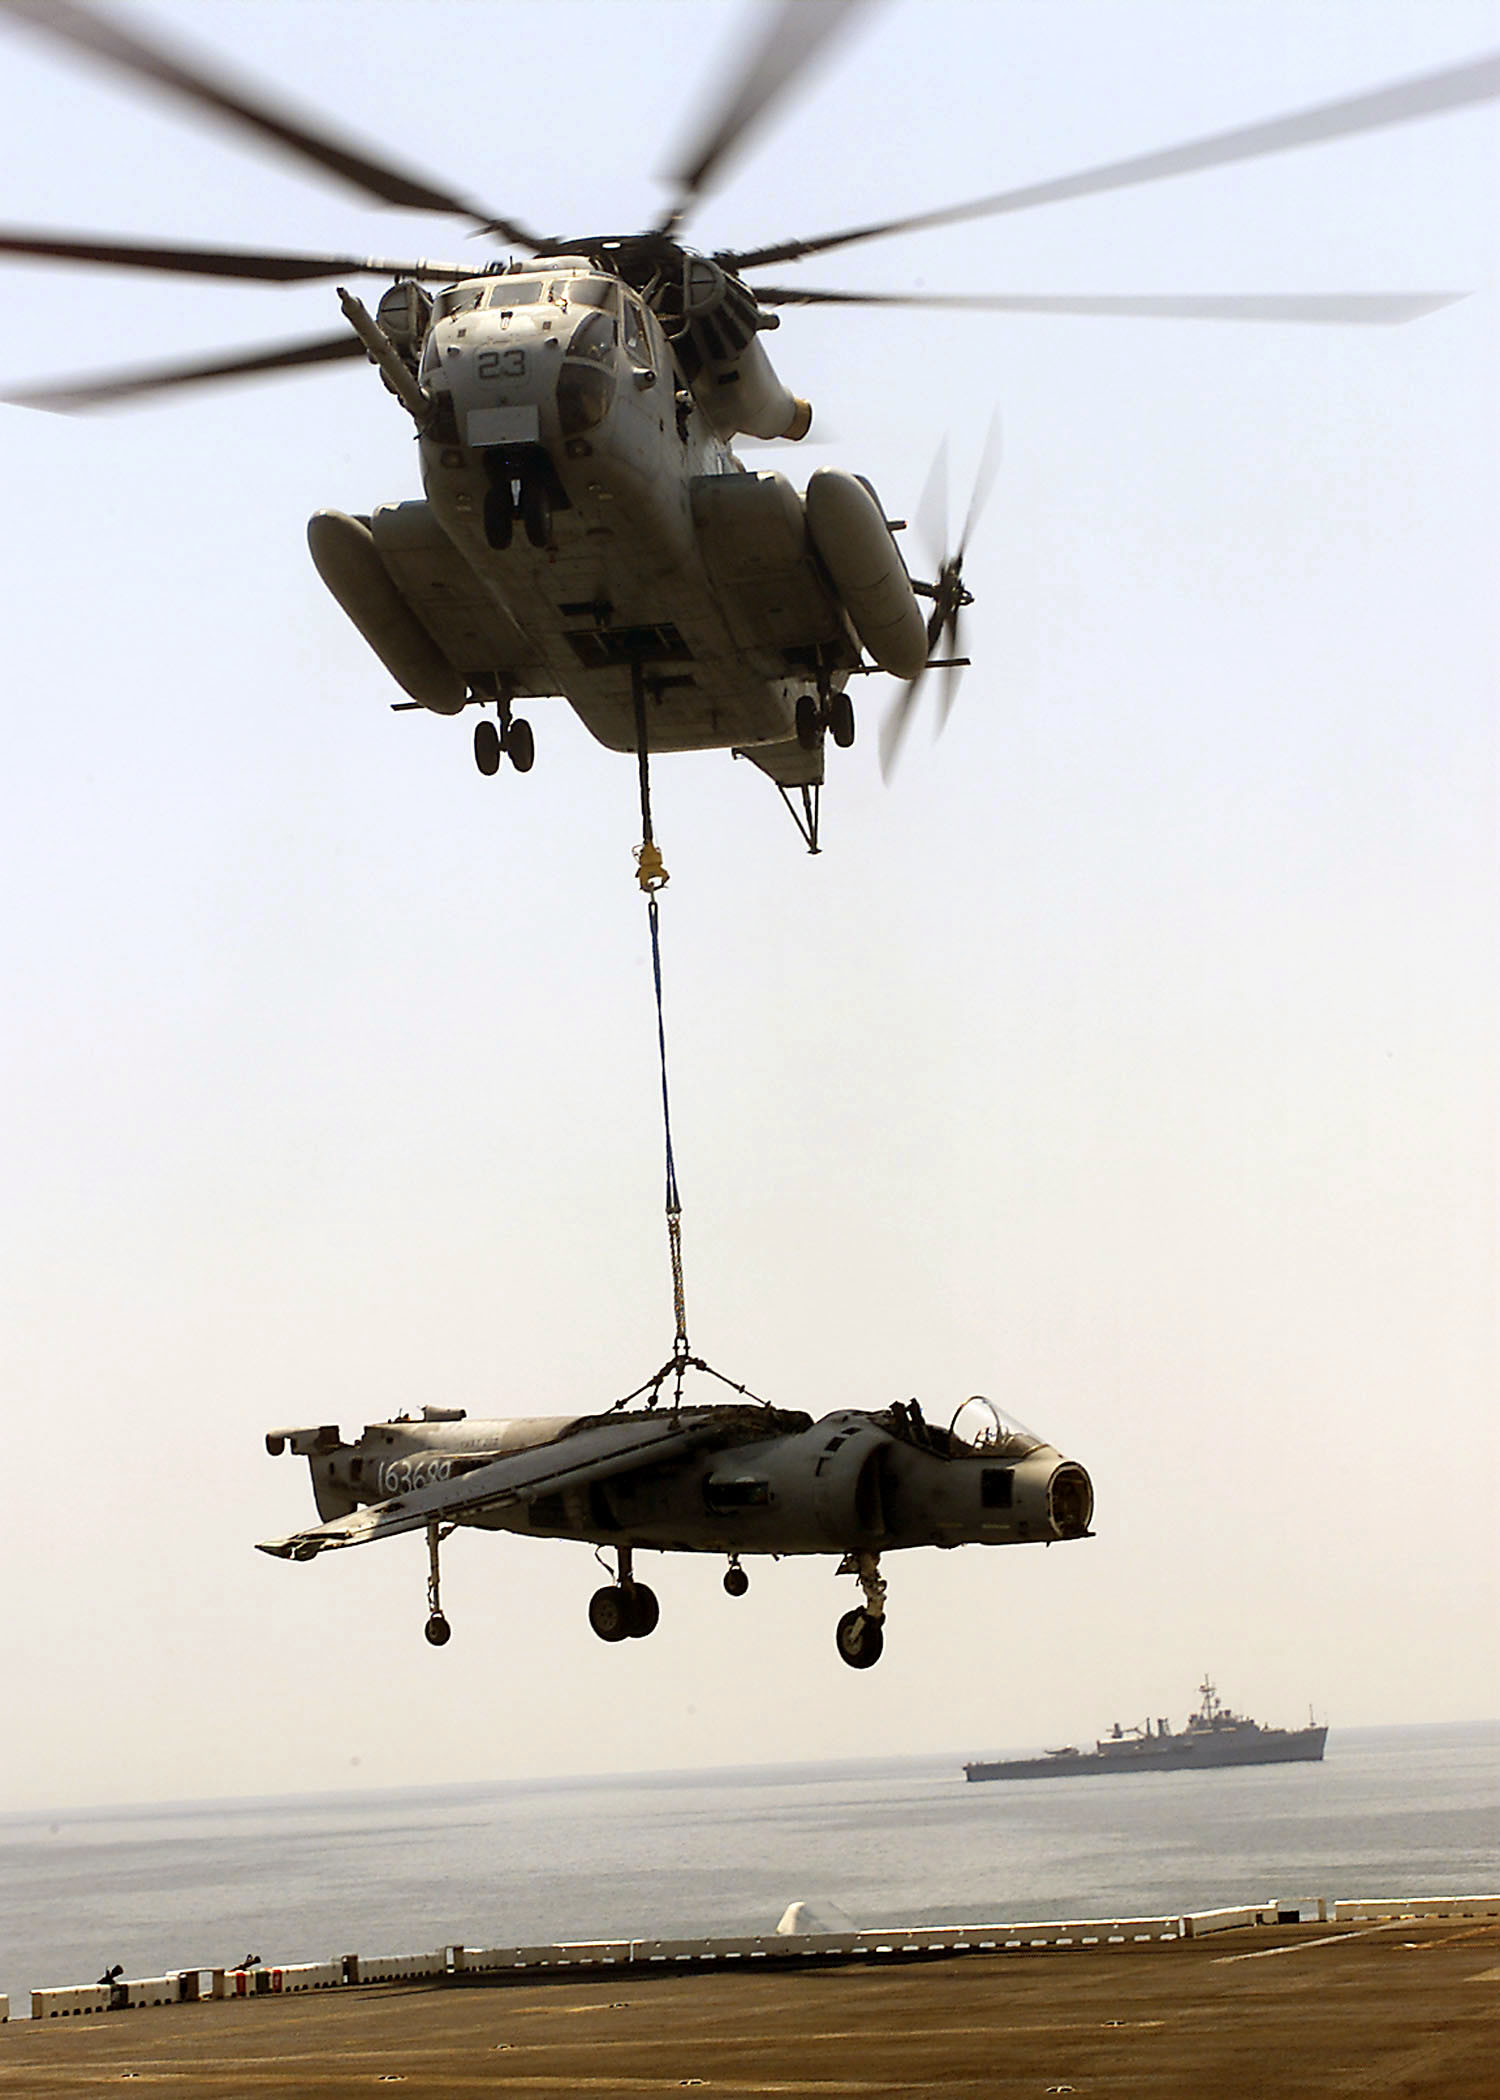 H-53 Sea Stallion In Action